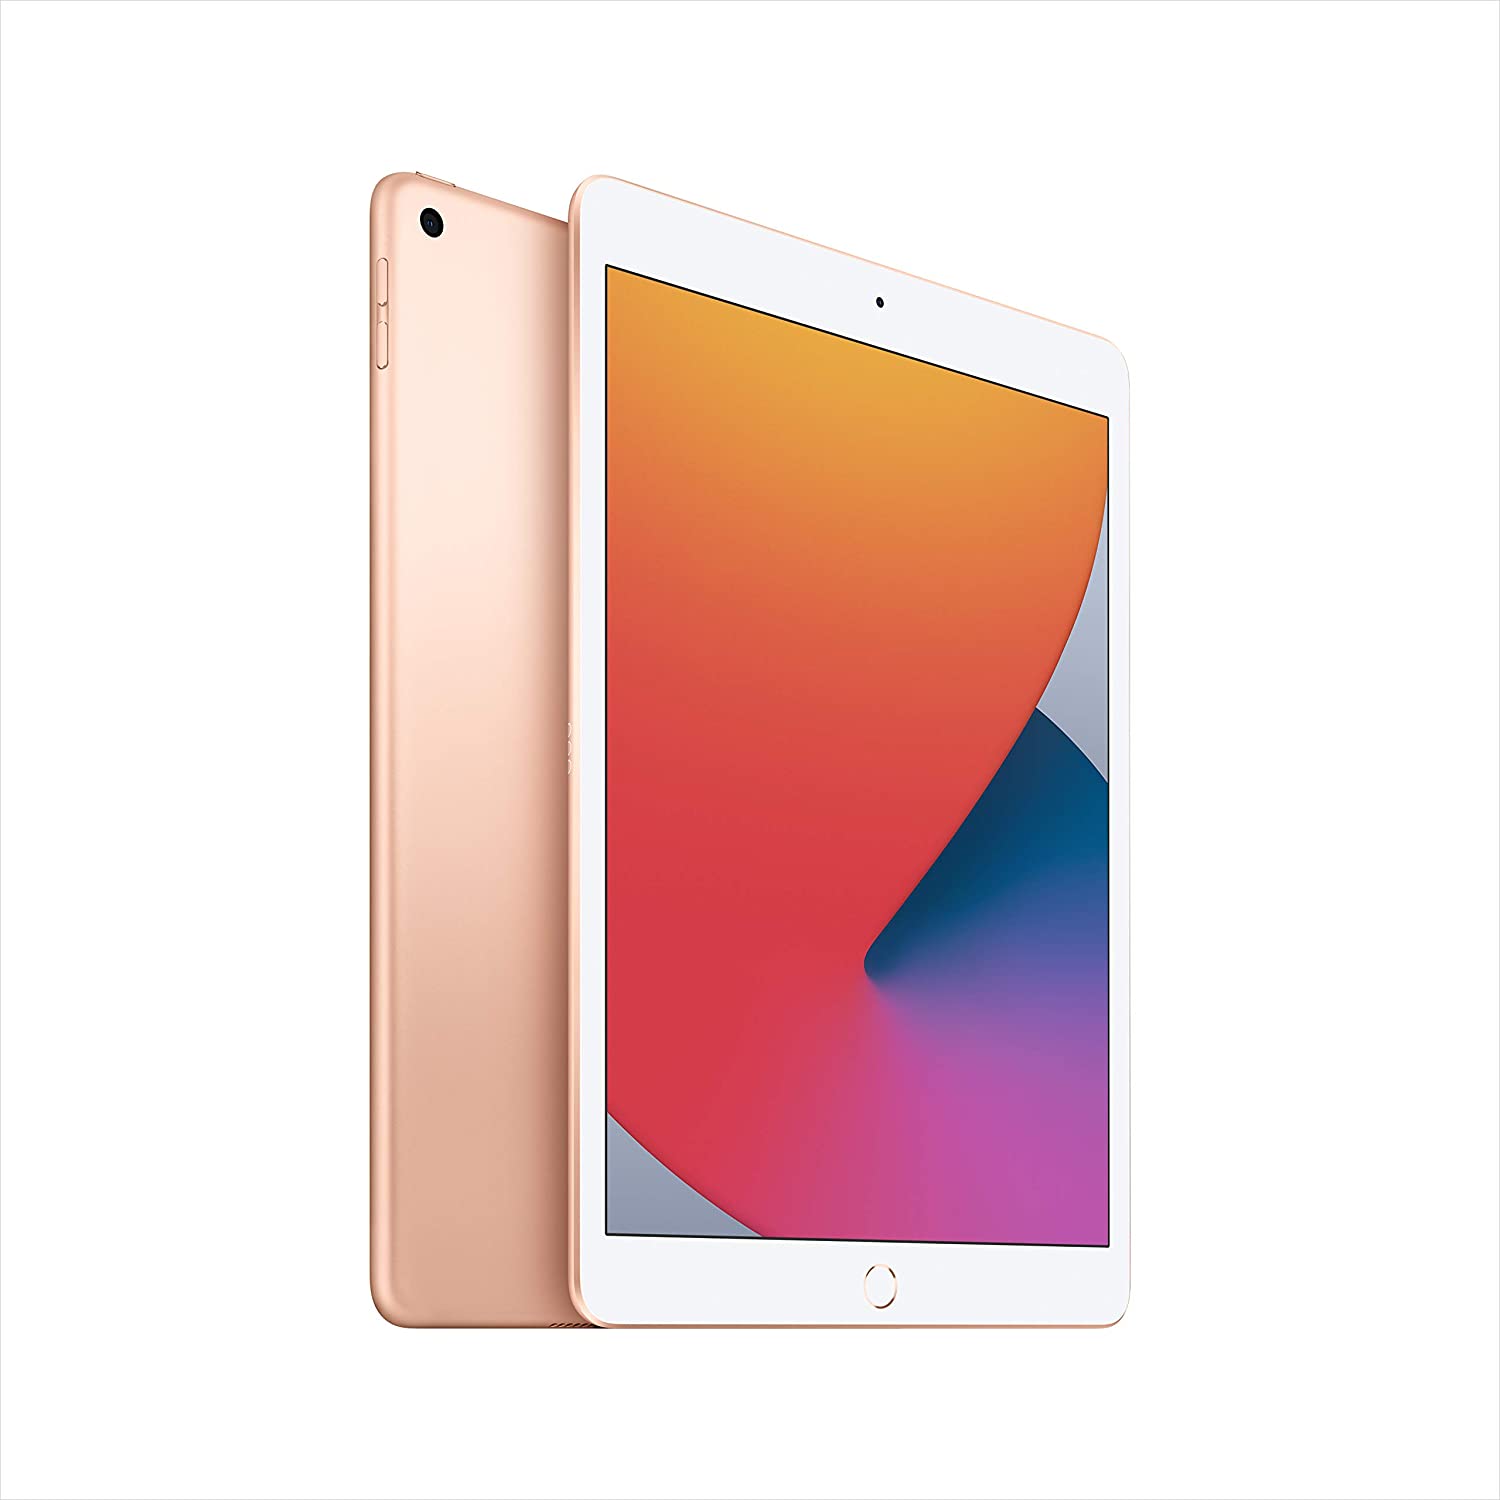 Apple 10.2-inch iPad Wi-Fi 32GB - Gold (Fall 2020) 8th Gen - Side View